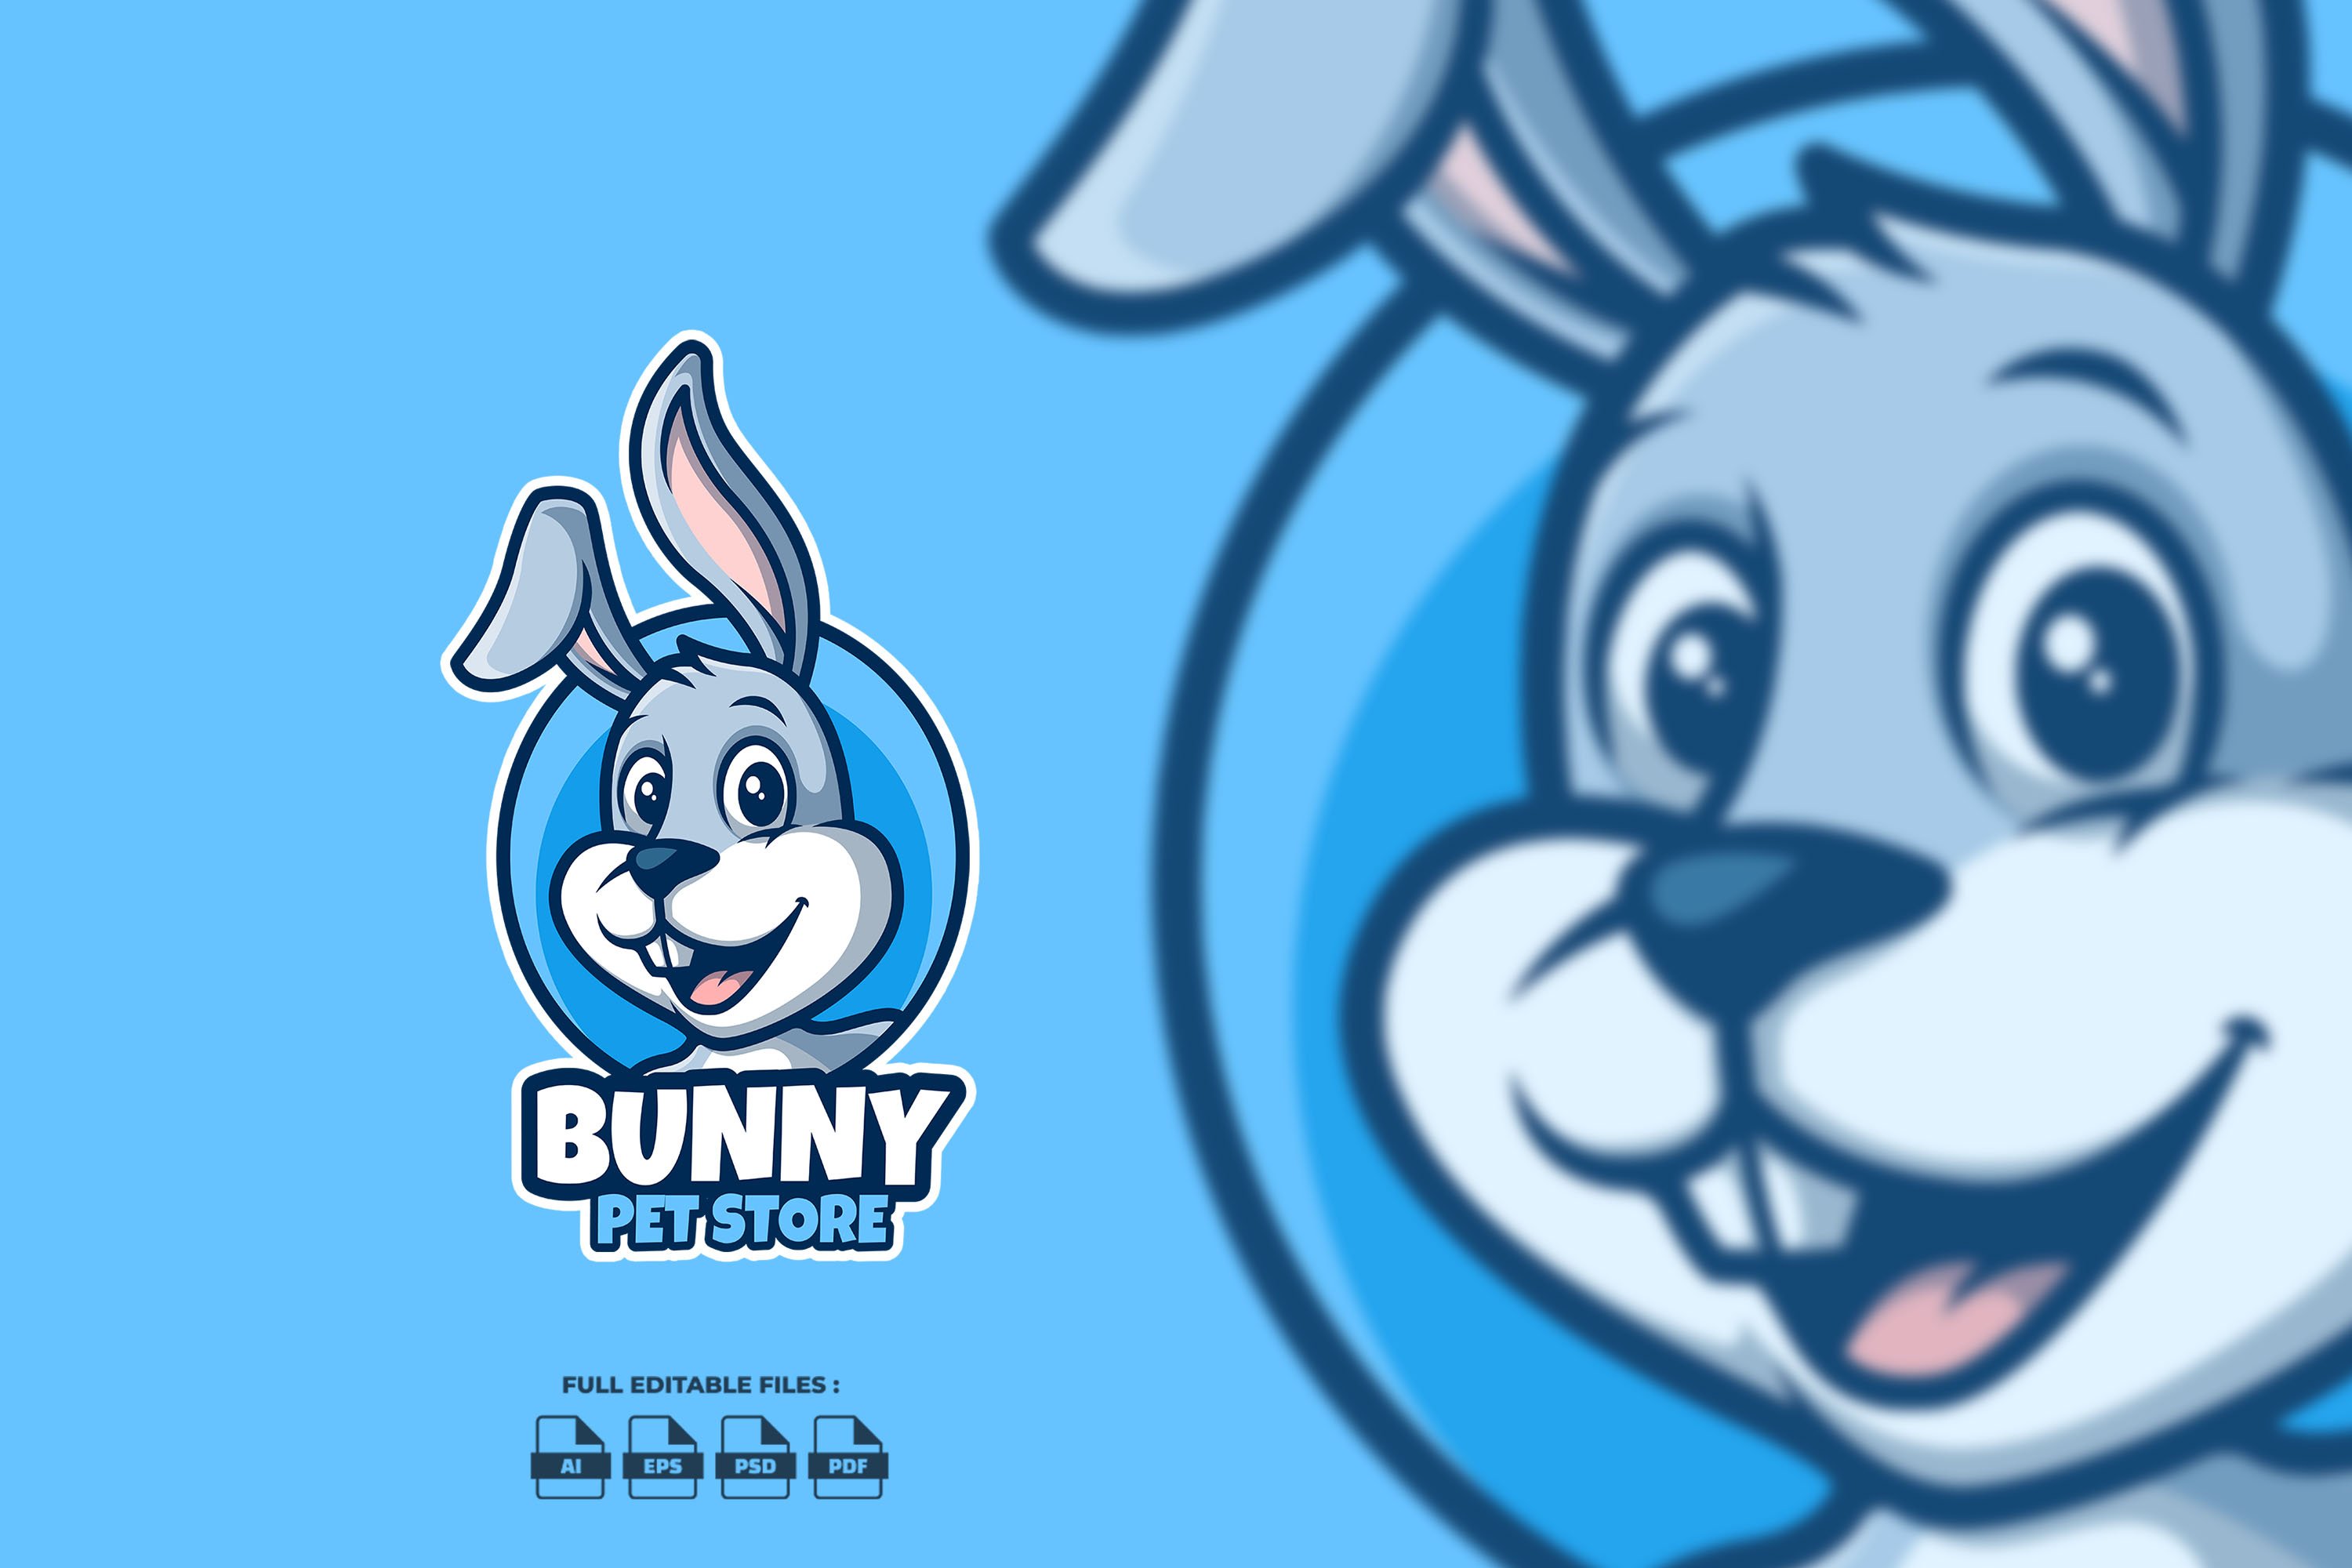 Bunny Pet Store Cartoon Logo cover image.